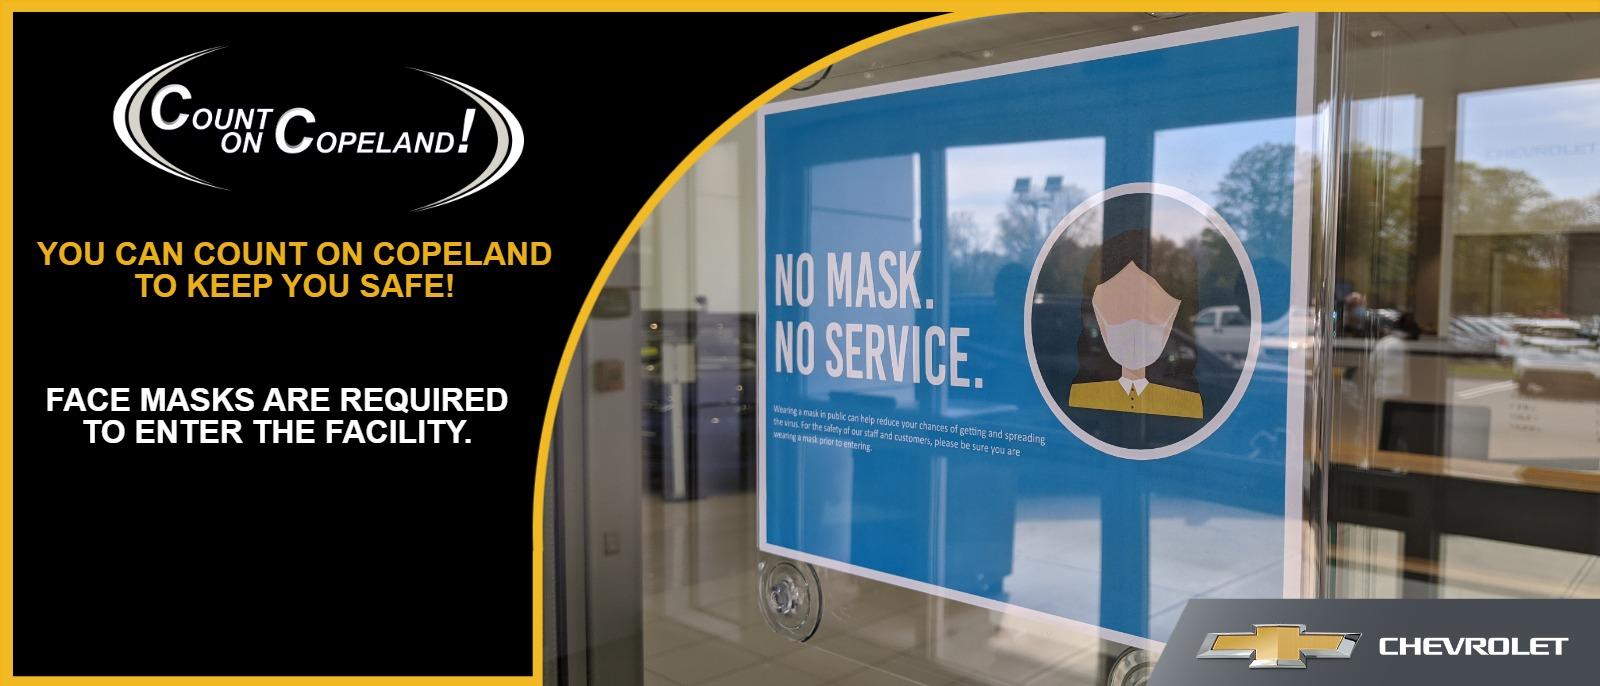 No Mask. No Service.